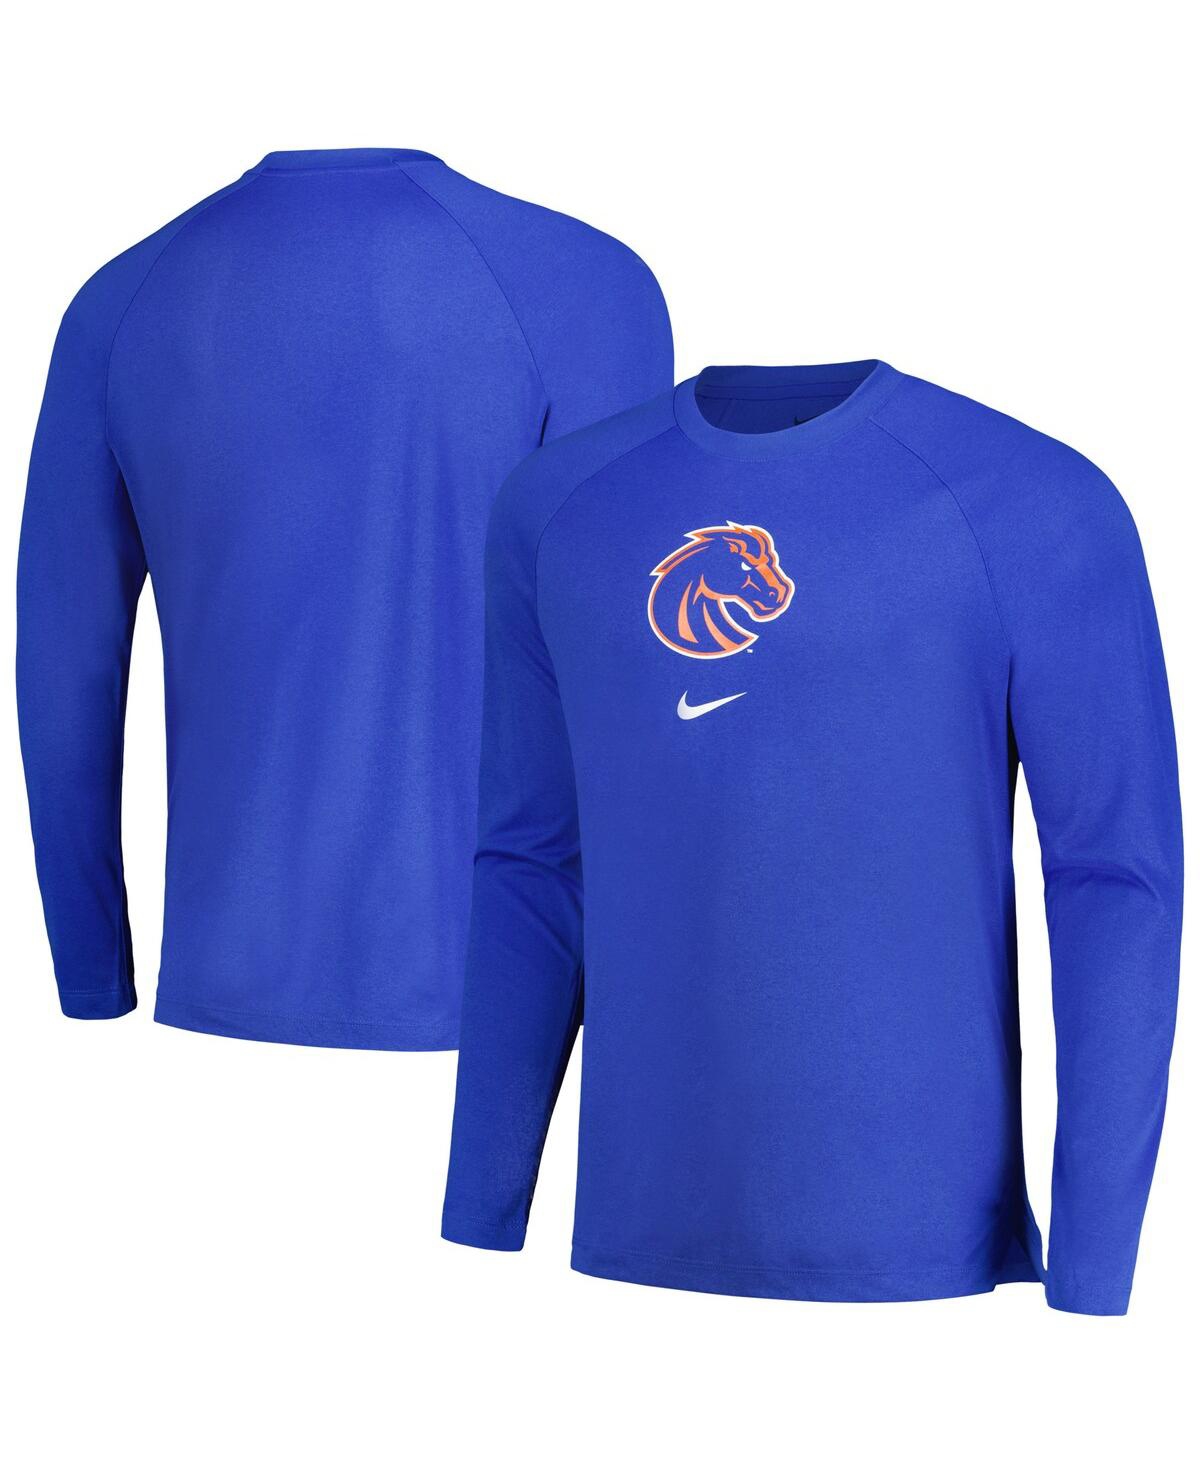 Shop Nike Men's Royal Boise State Broncos Basketball Spotlight Raglan Performance Long Sleeve T-shirt